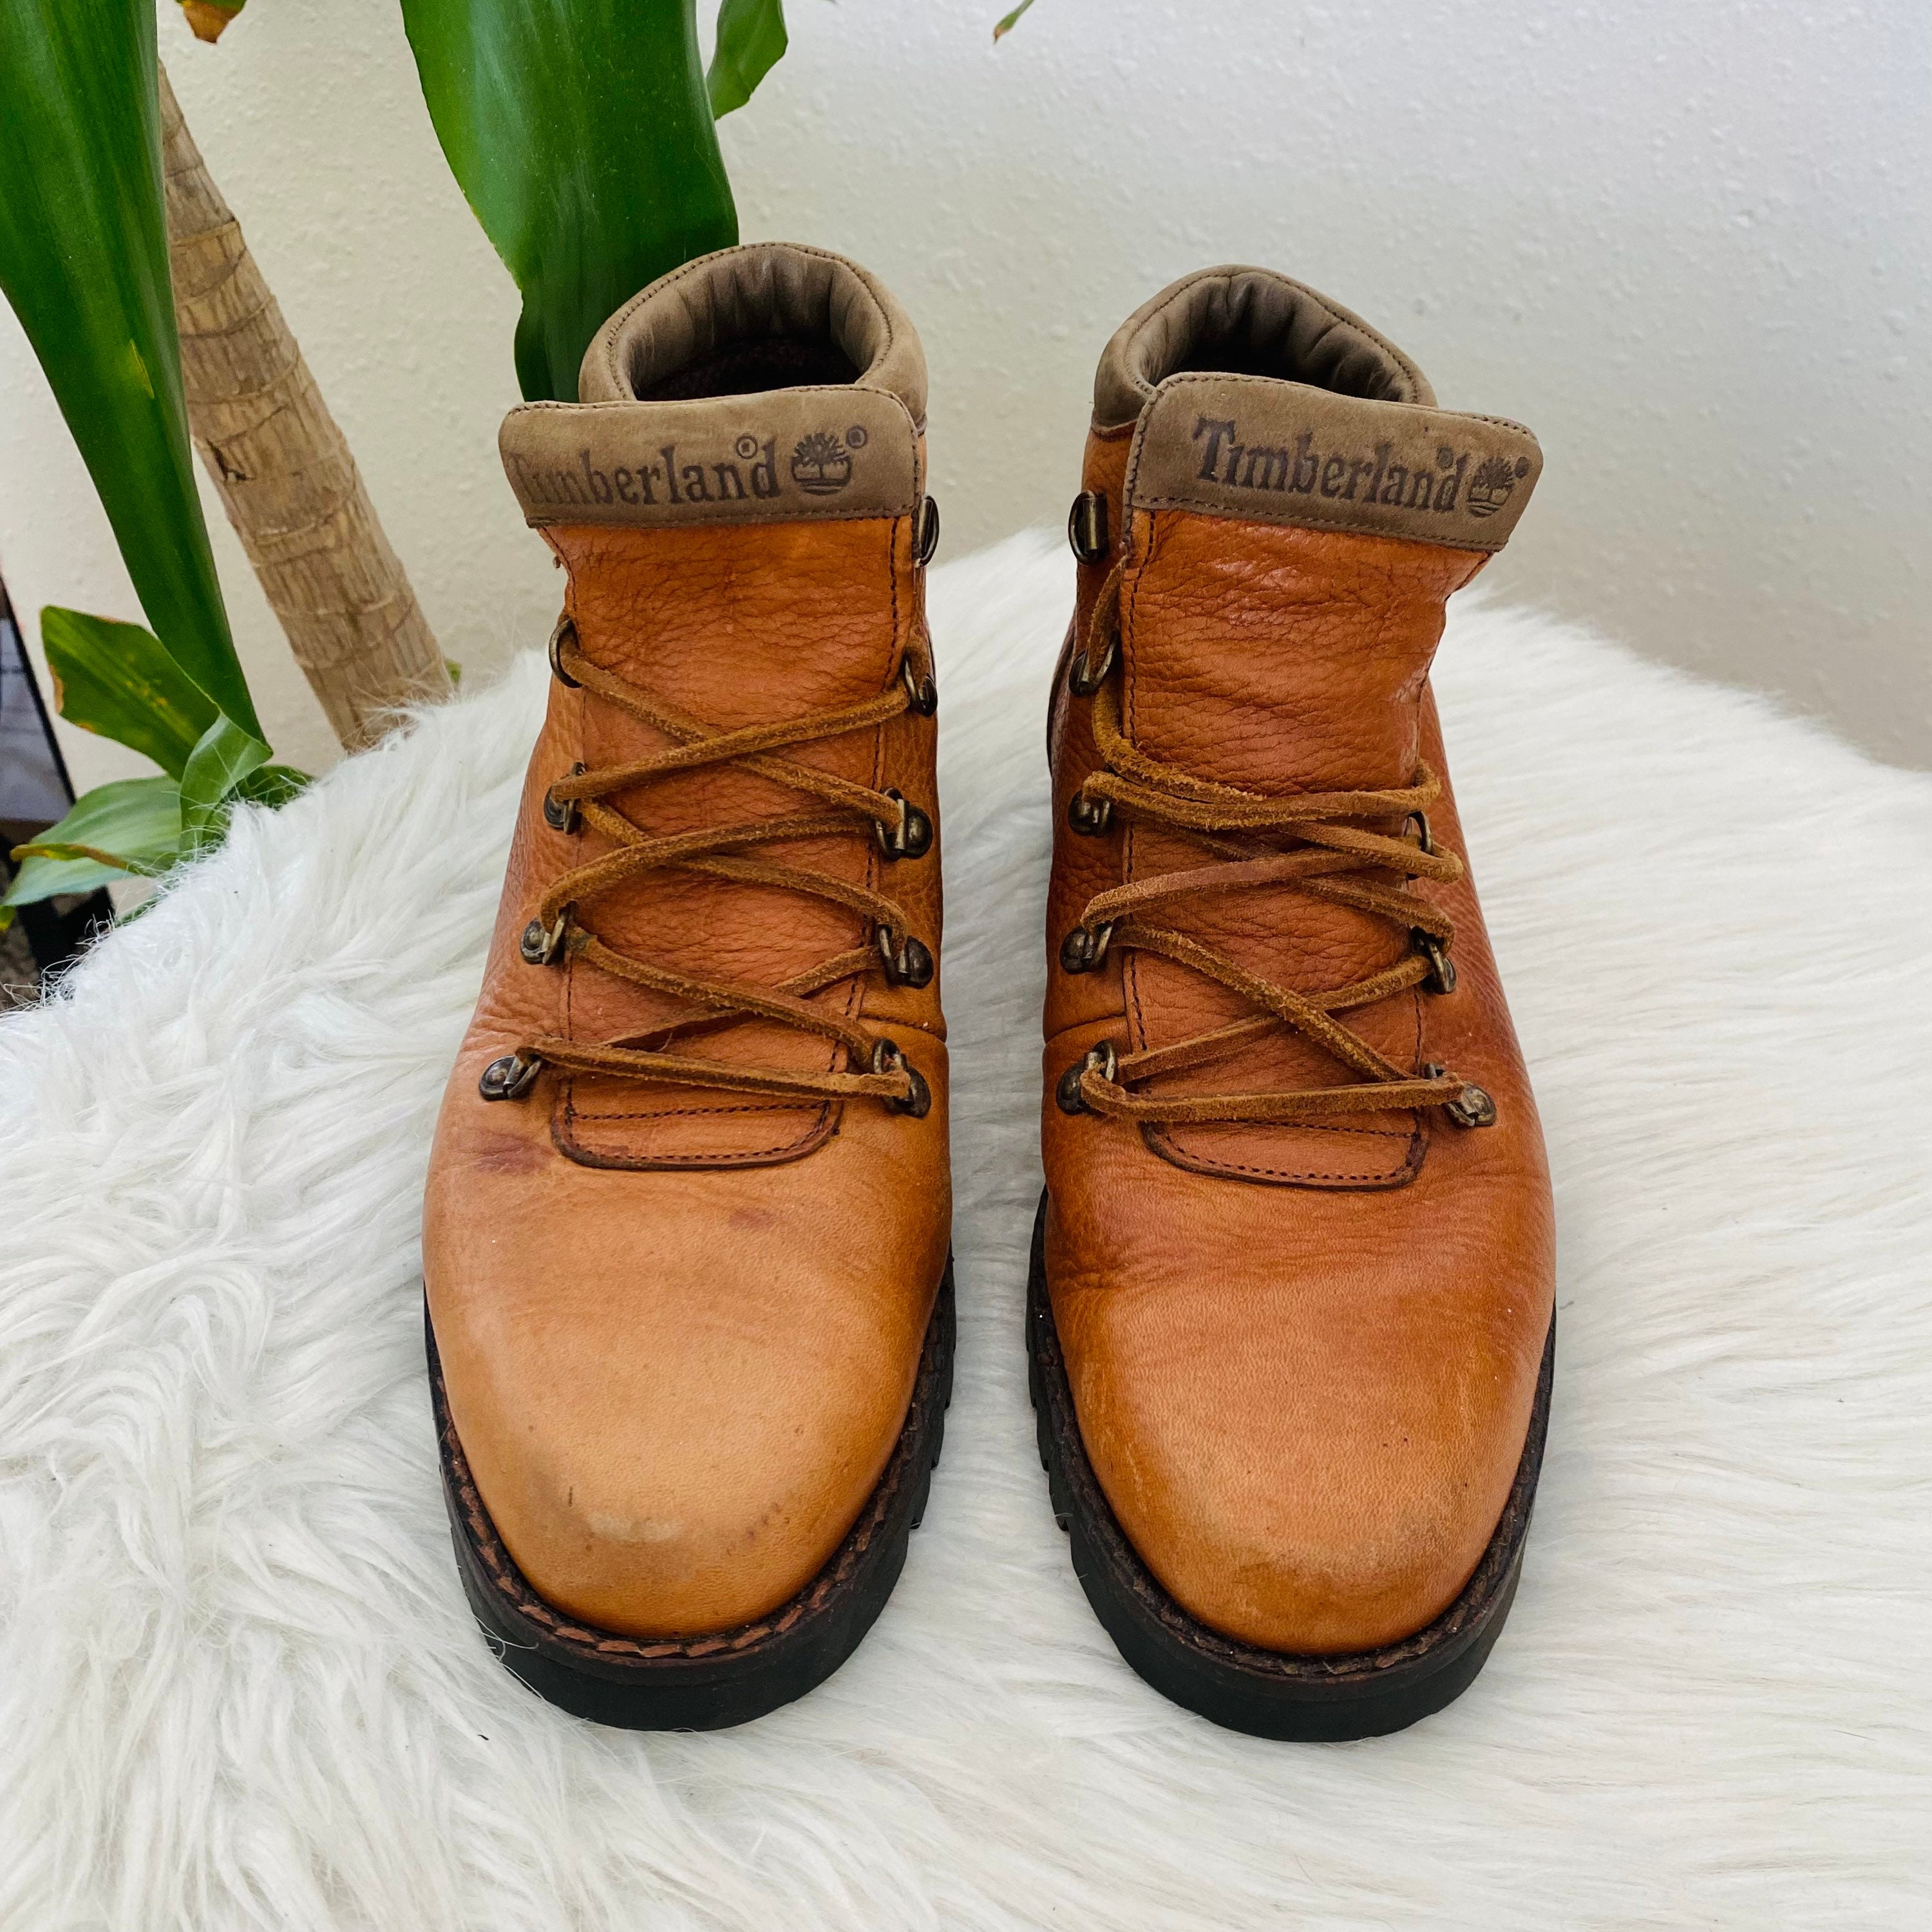 Vintage Mens Suede Timberlands Moccasin Shoes